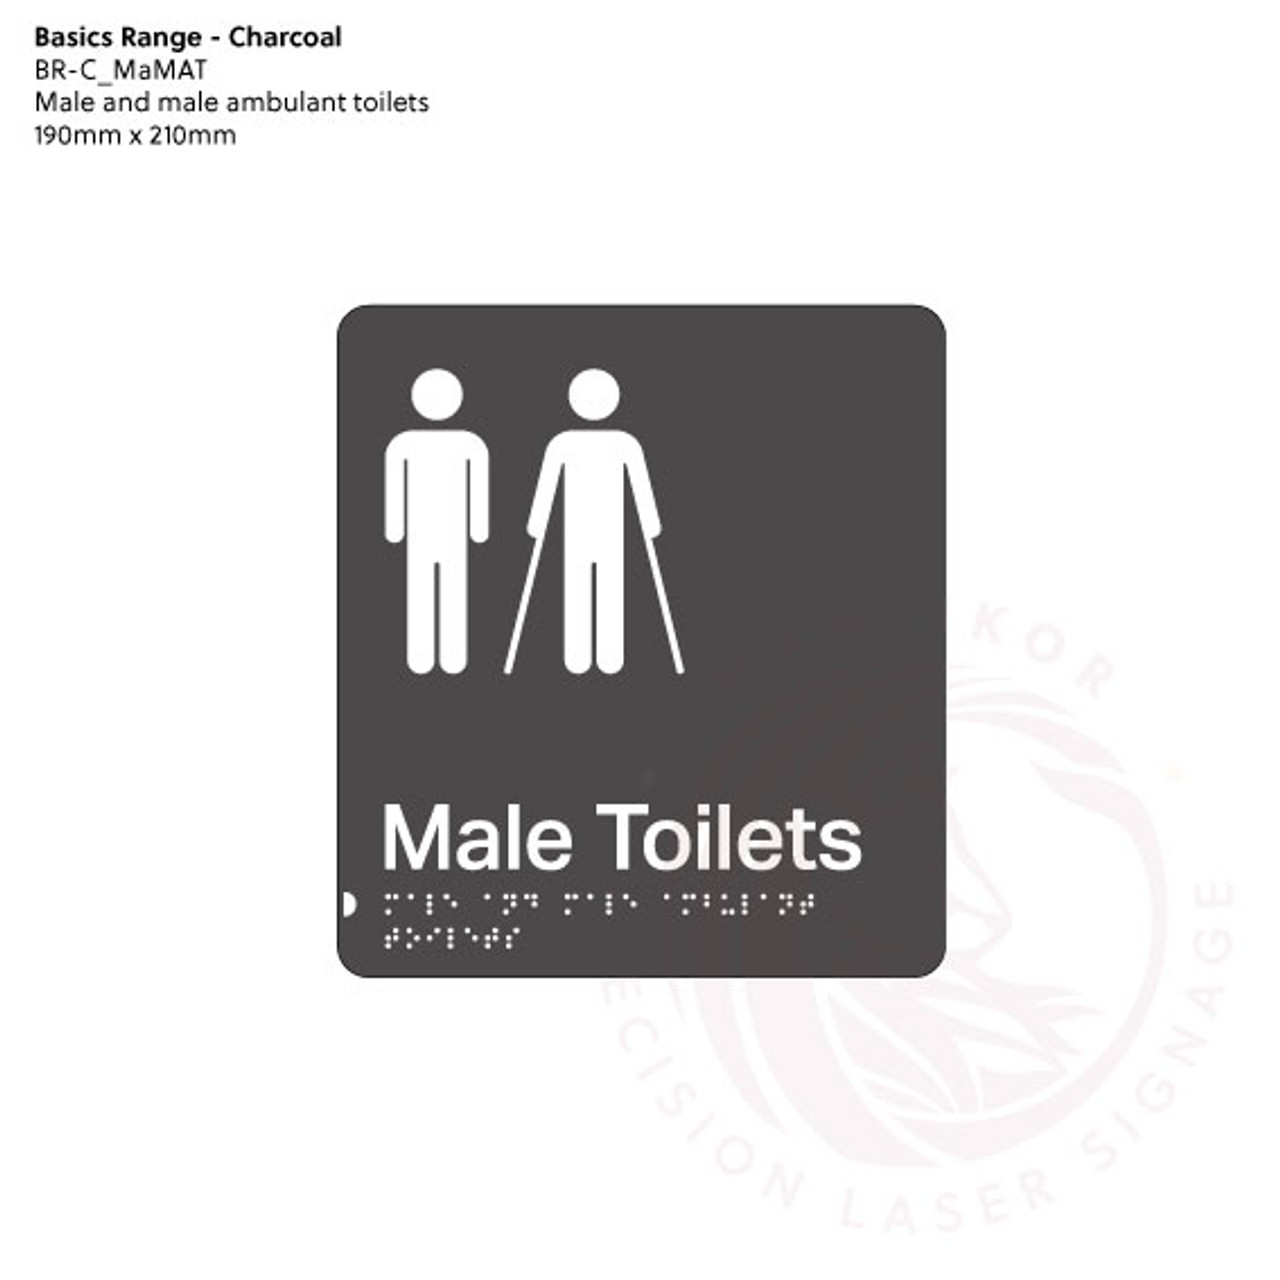 Basics Range - Charcoal Braille Signs - Male and Male Ambulant Toilets